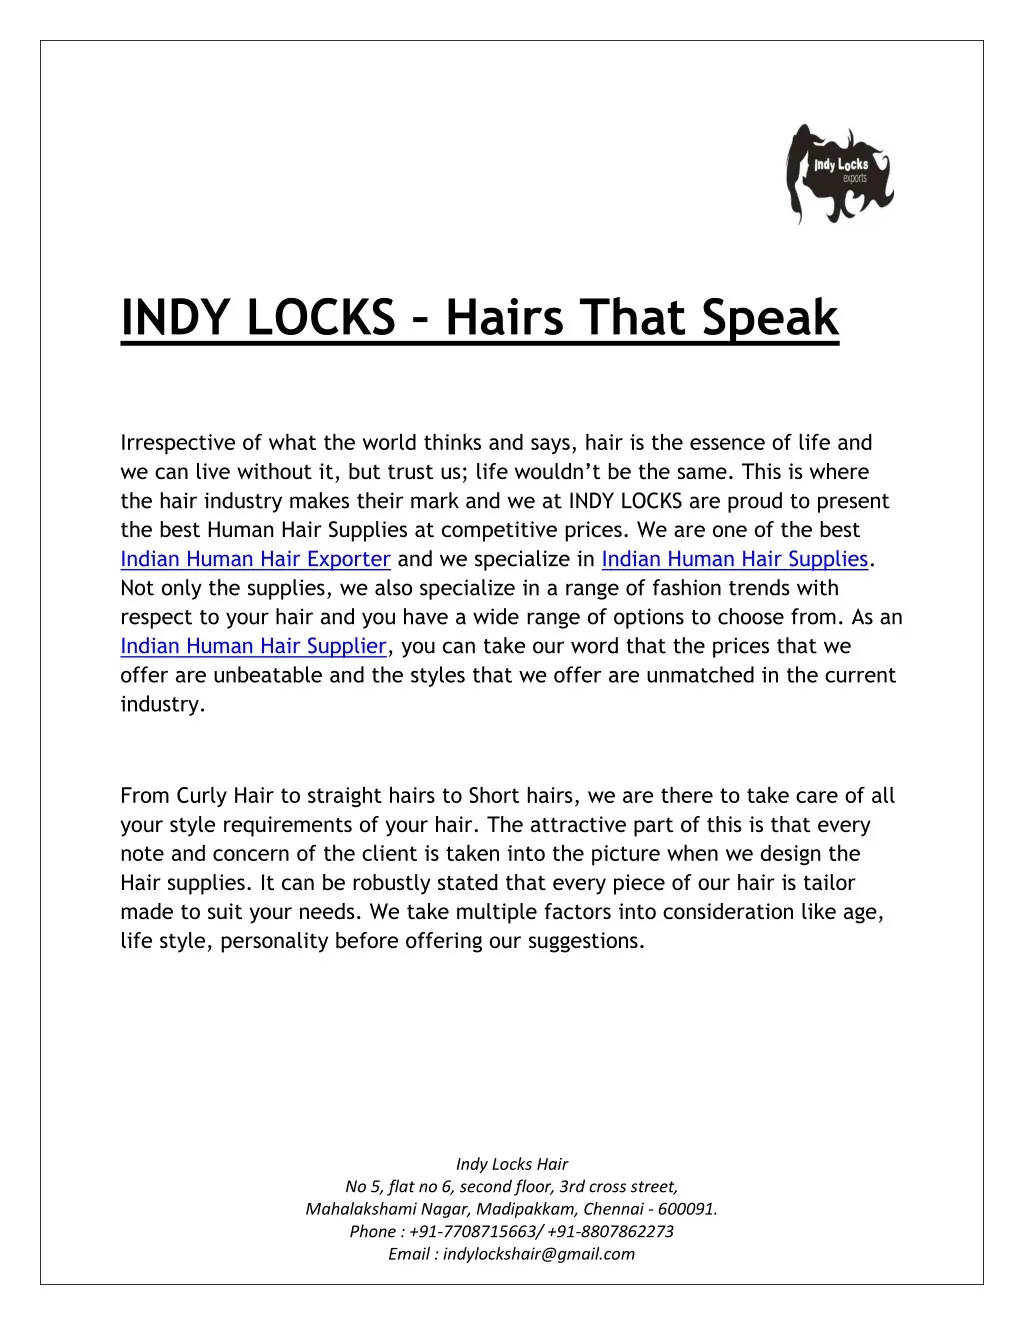 indy locks hairs that speak